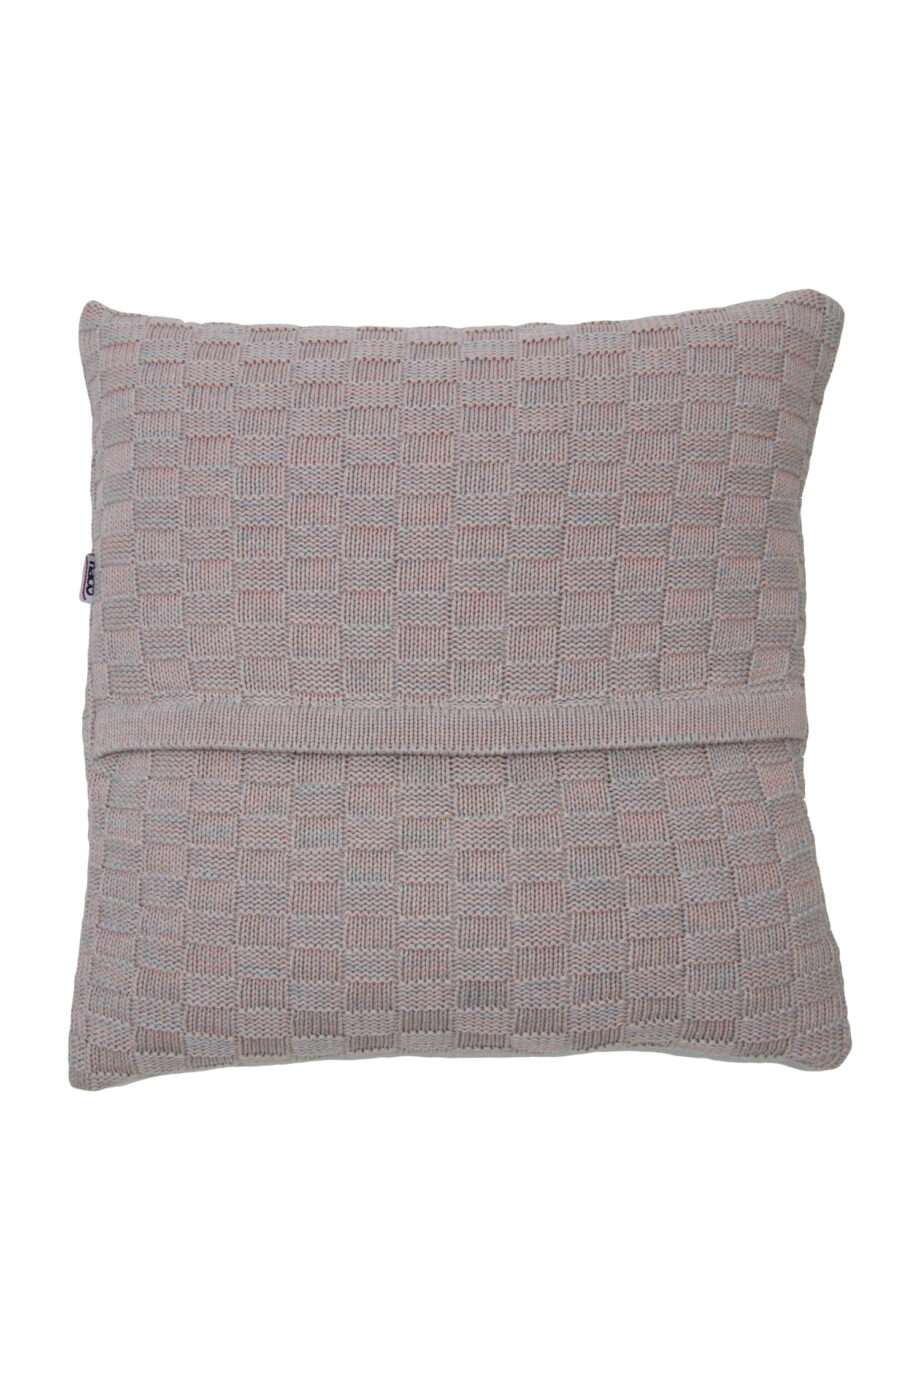 drops mêlée powder rose knitted cotton pillowcase xsmall